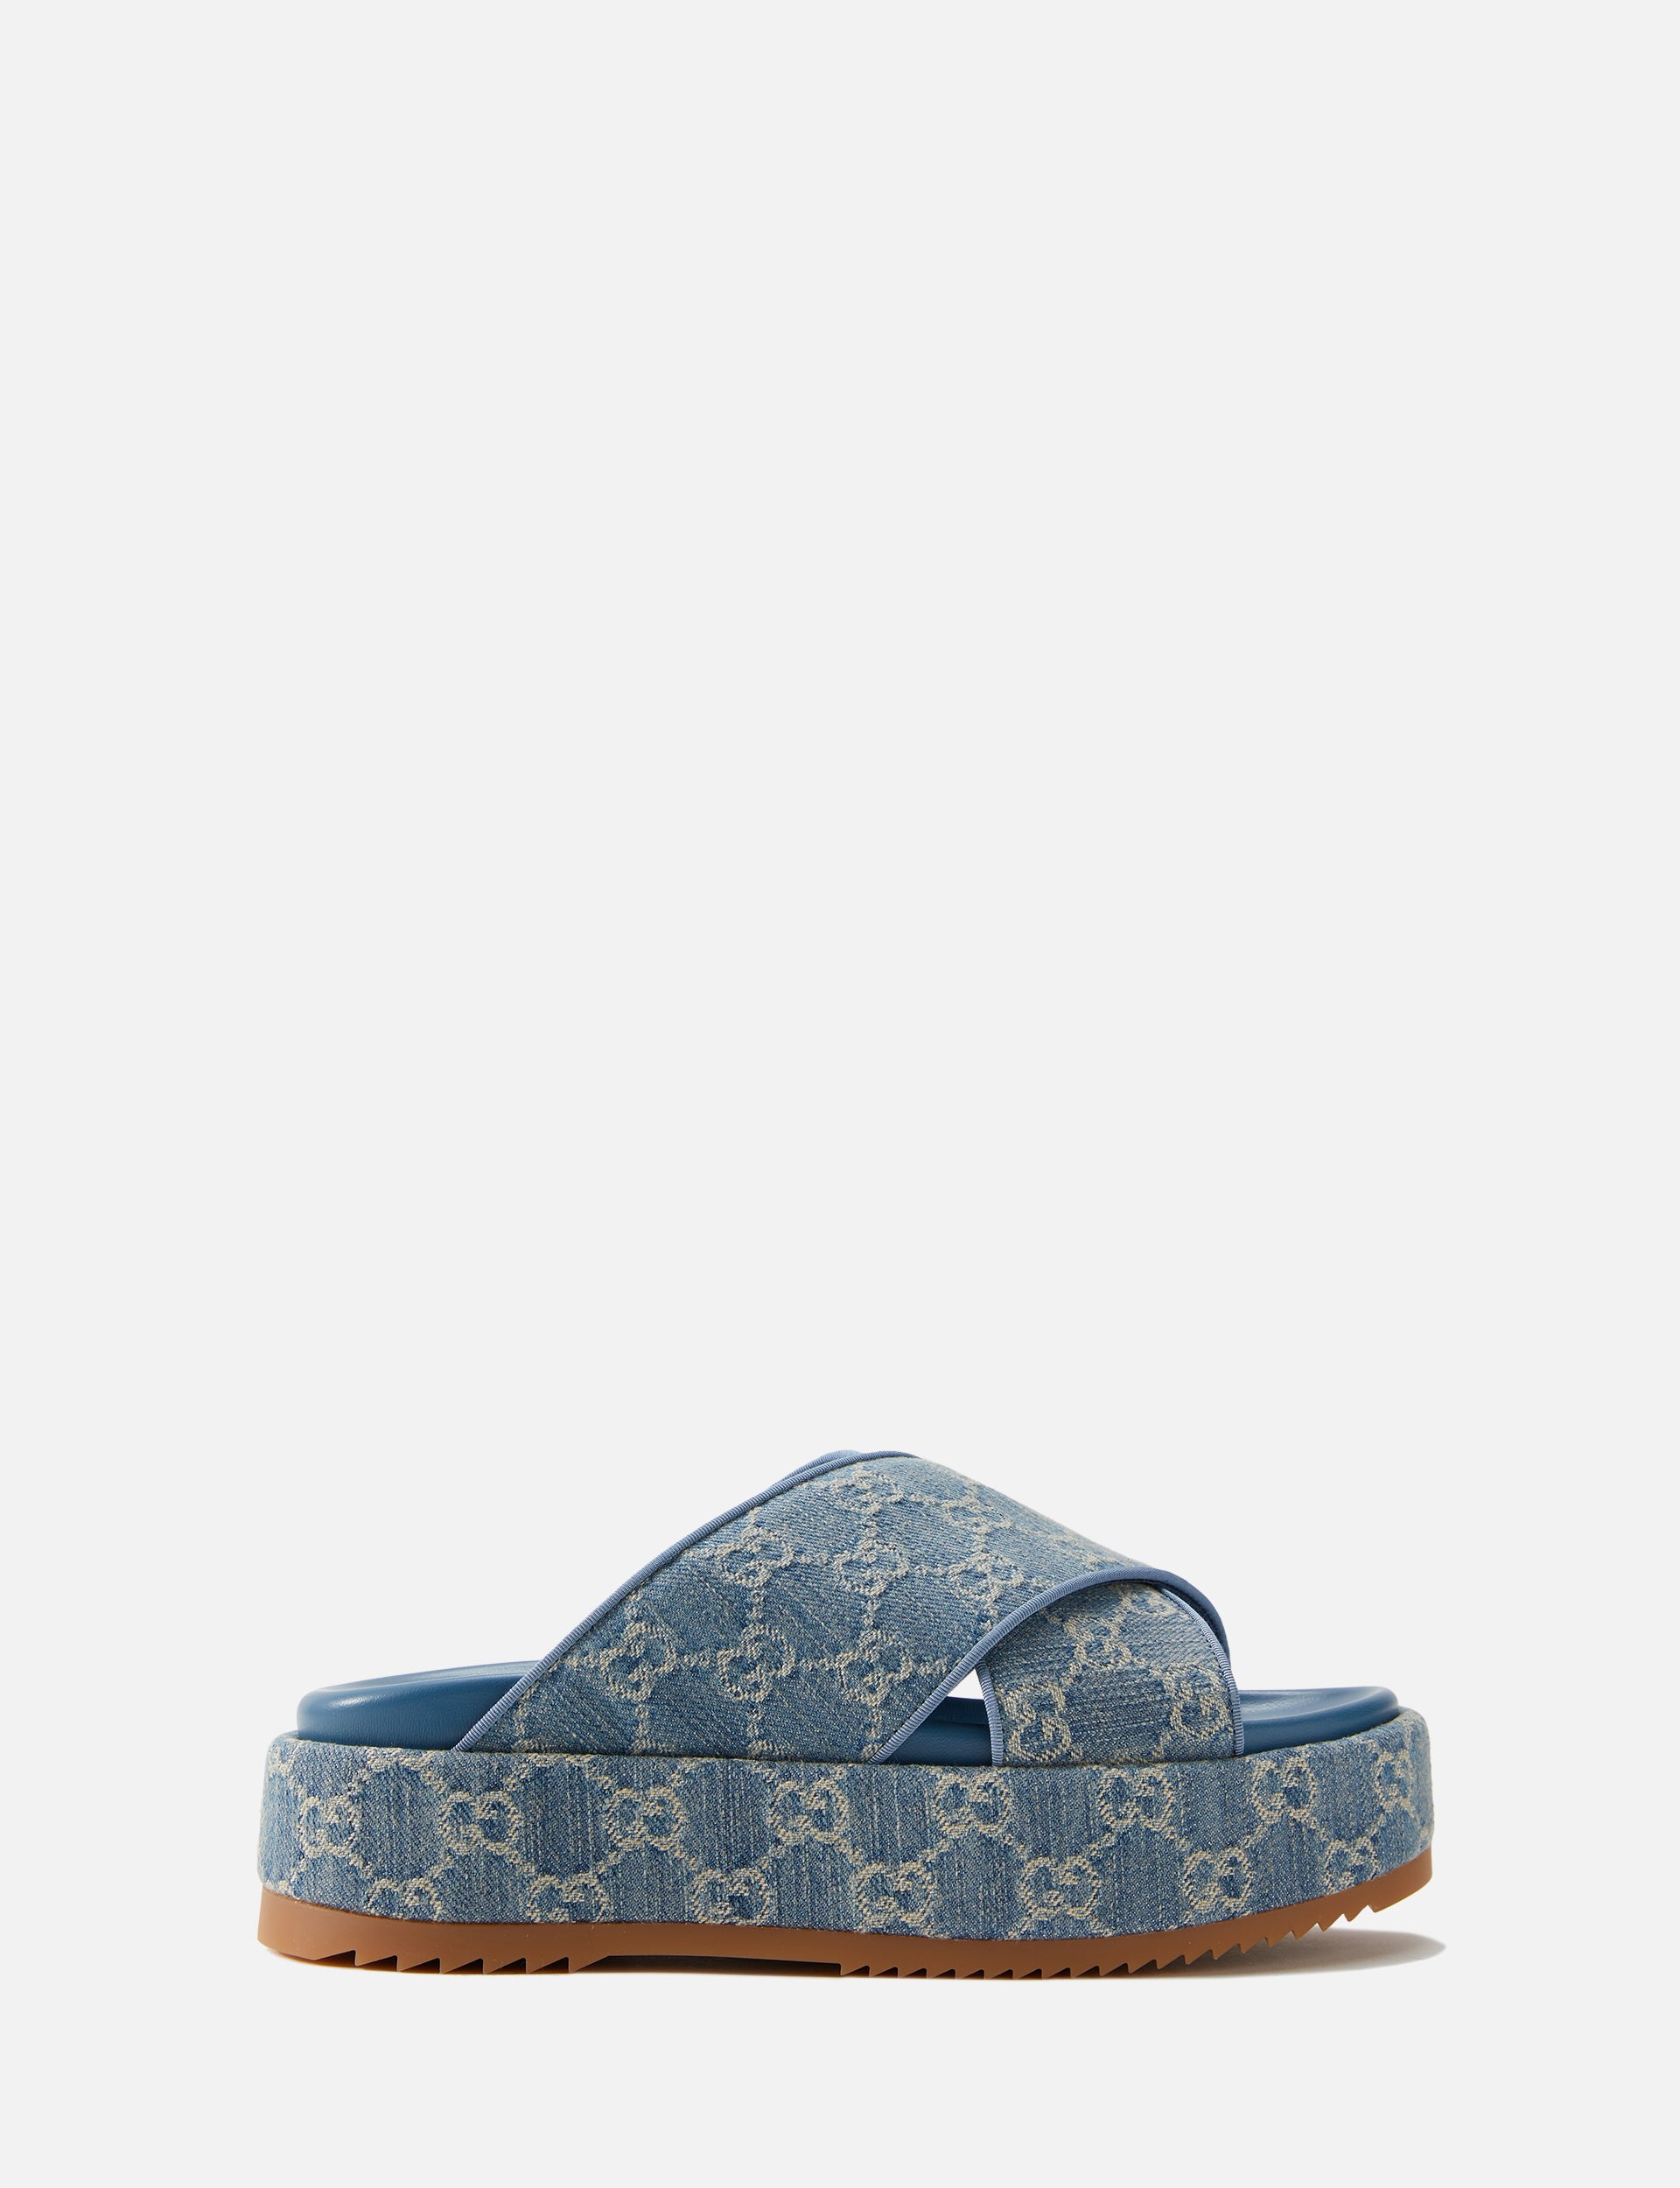 Gucci Black Suede Crystal Embellished Cone Heel Ankle Strap Sandals Size 37  - ShopStyle